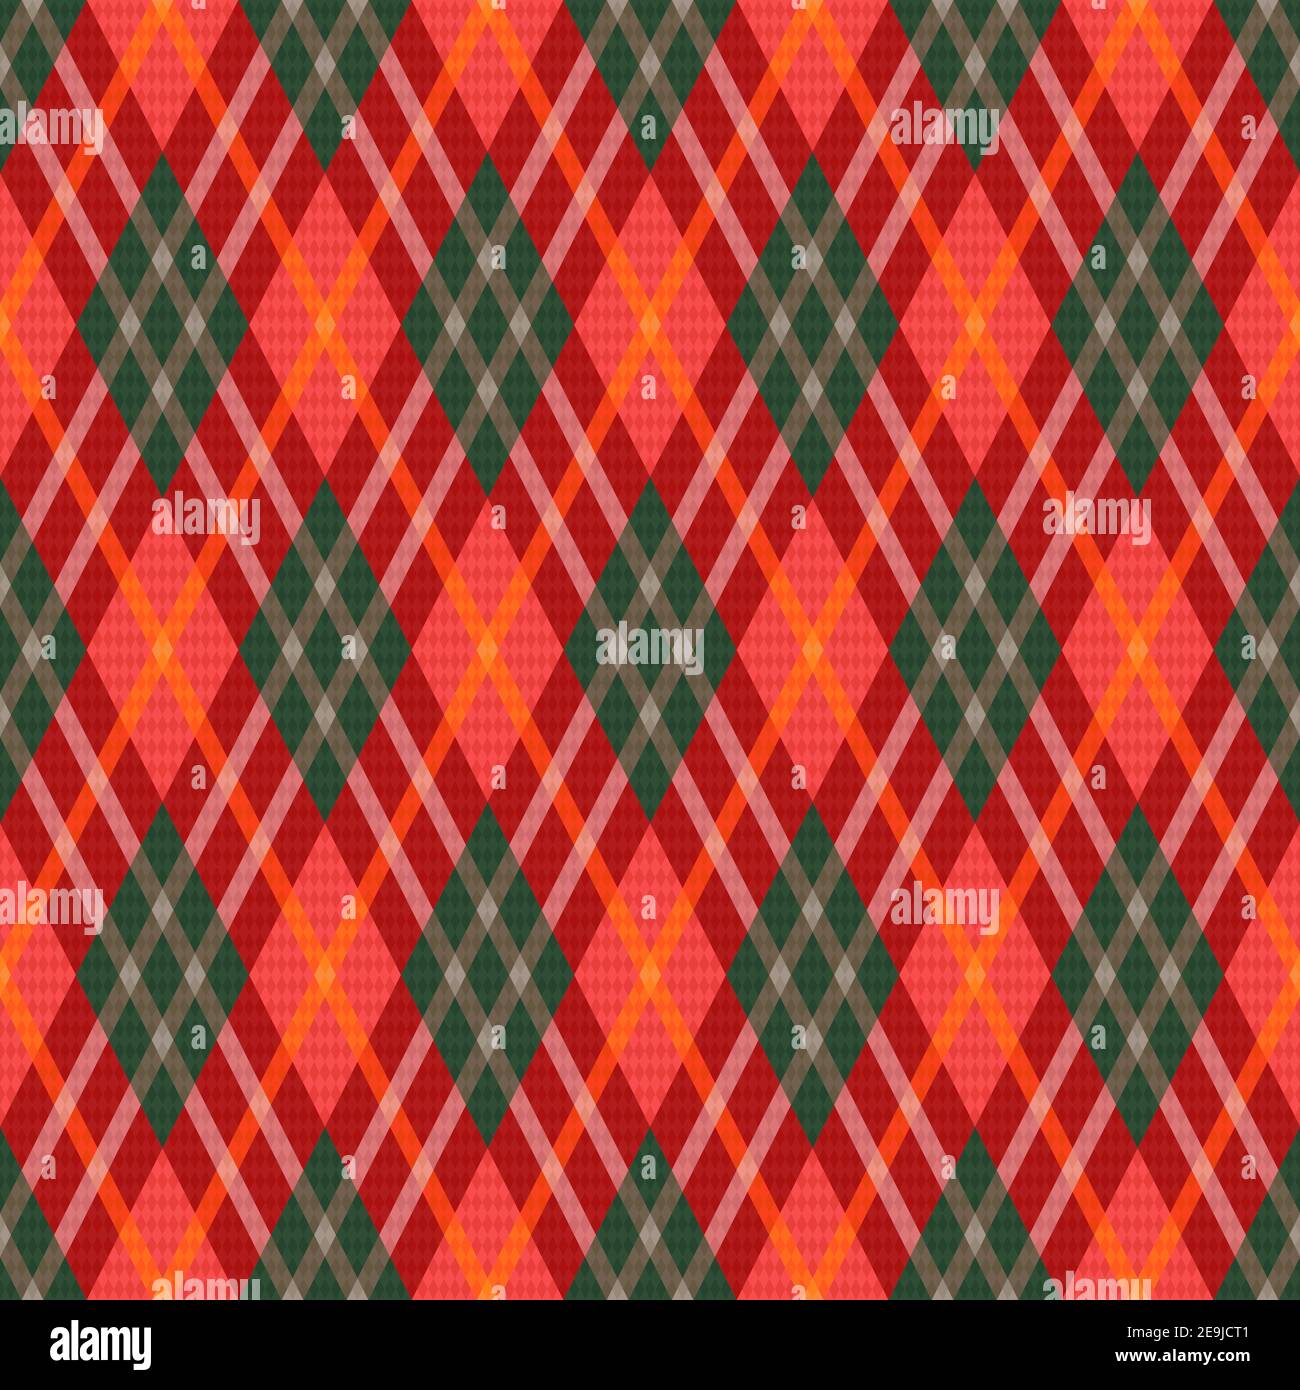 Rhombic nahtlose bunte in grünen, roten und orangen Farbtönen Illustration Muster als Tartan Plaid Stock Vektor